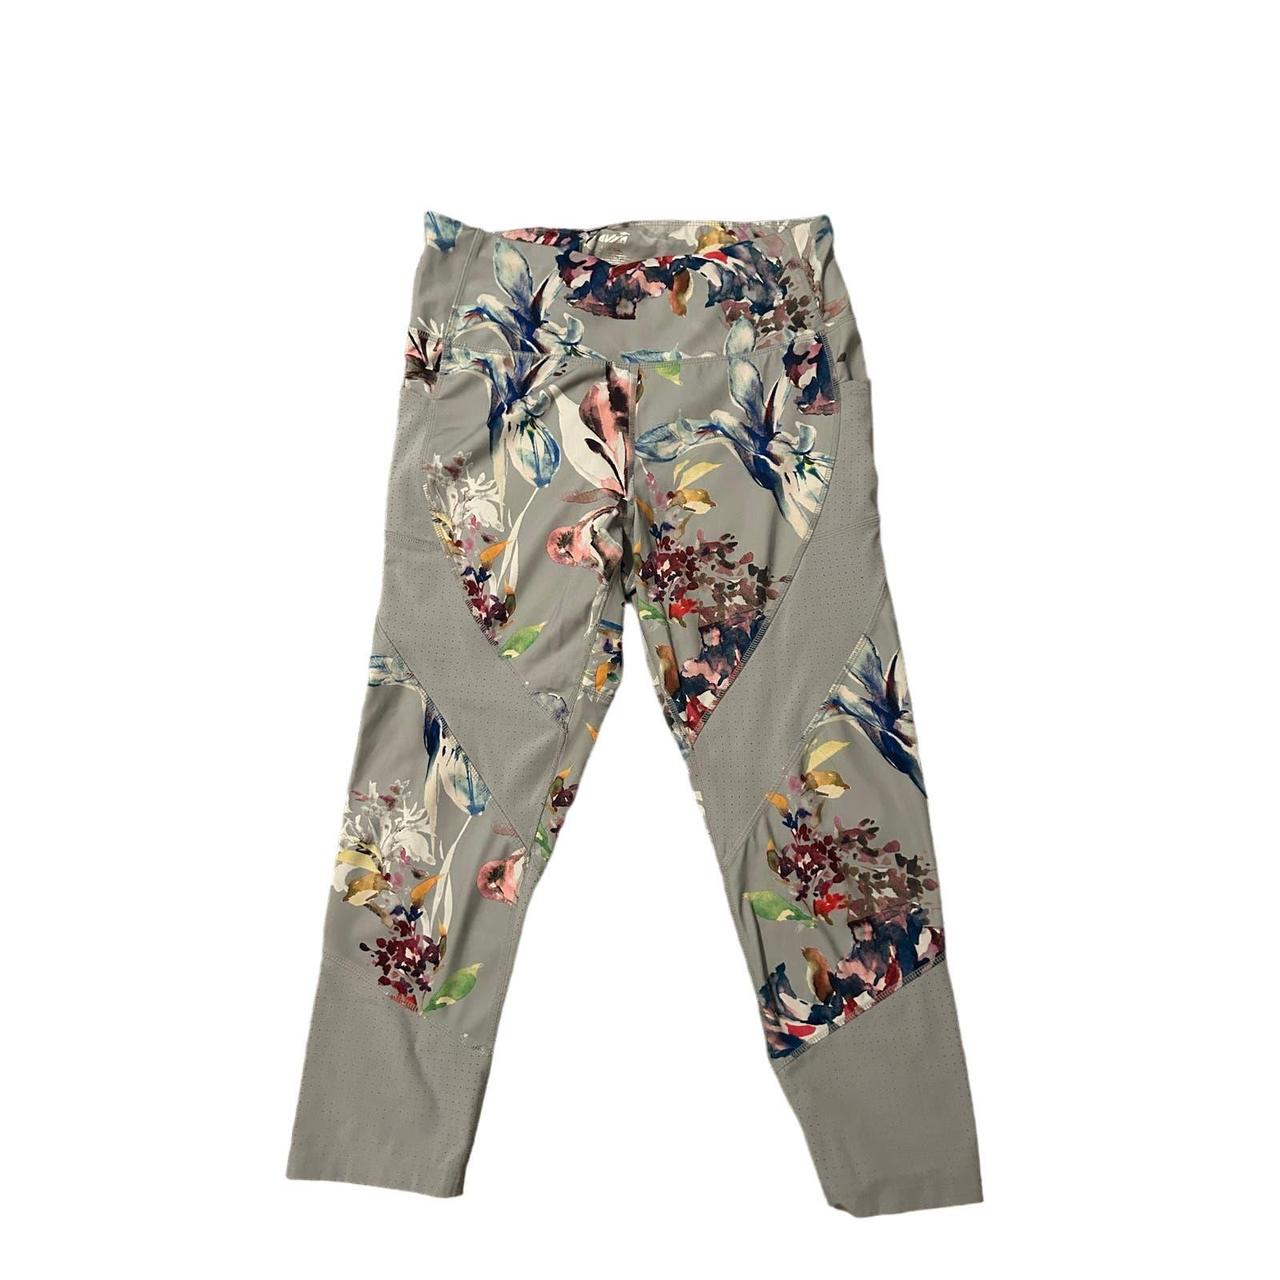 Floral print Capri AVIA brand workout leggings, with - Depop